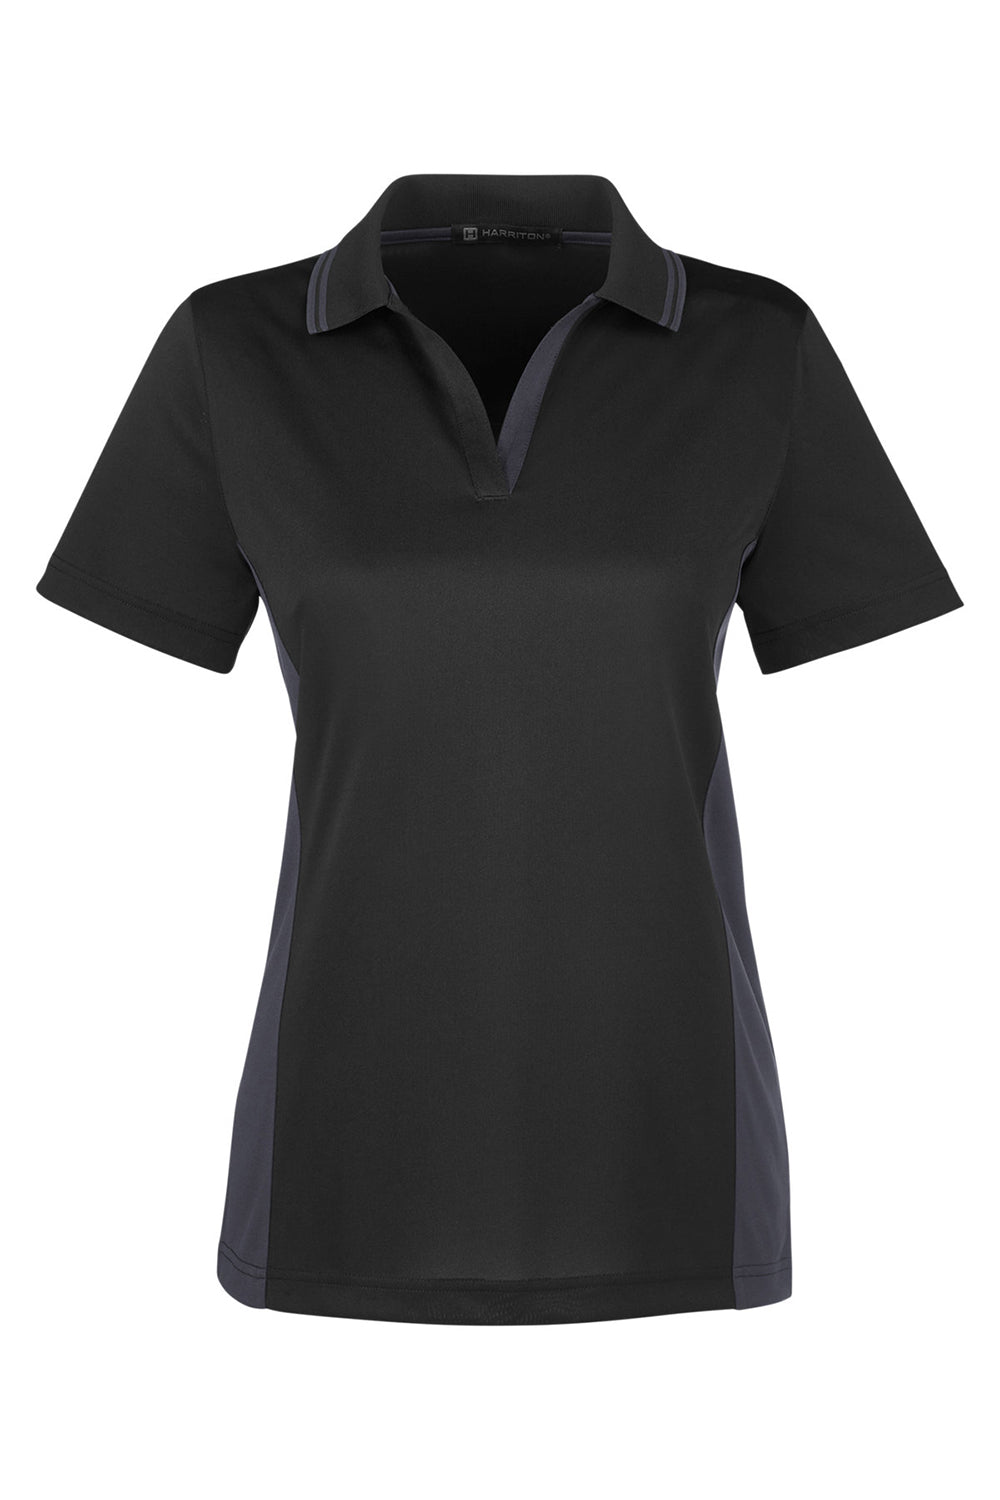 Harriton M386W Womens Flash Performance Moisture Wicking Colorblock Short Sleeve Polo Shirt Black/Dark Charcoal Grey Flat Front